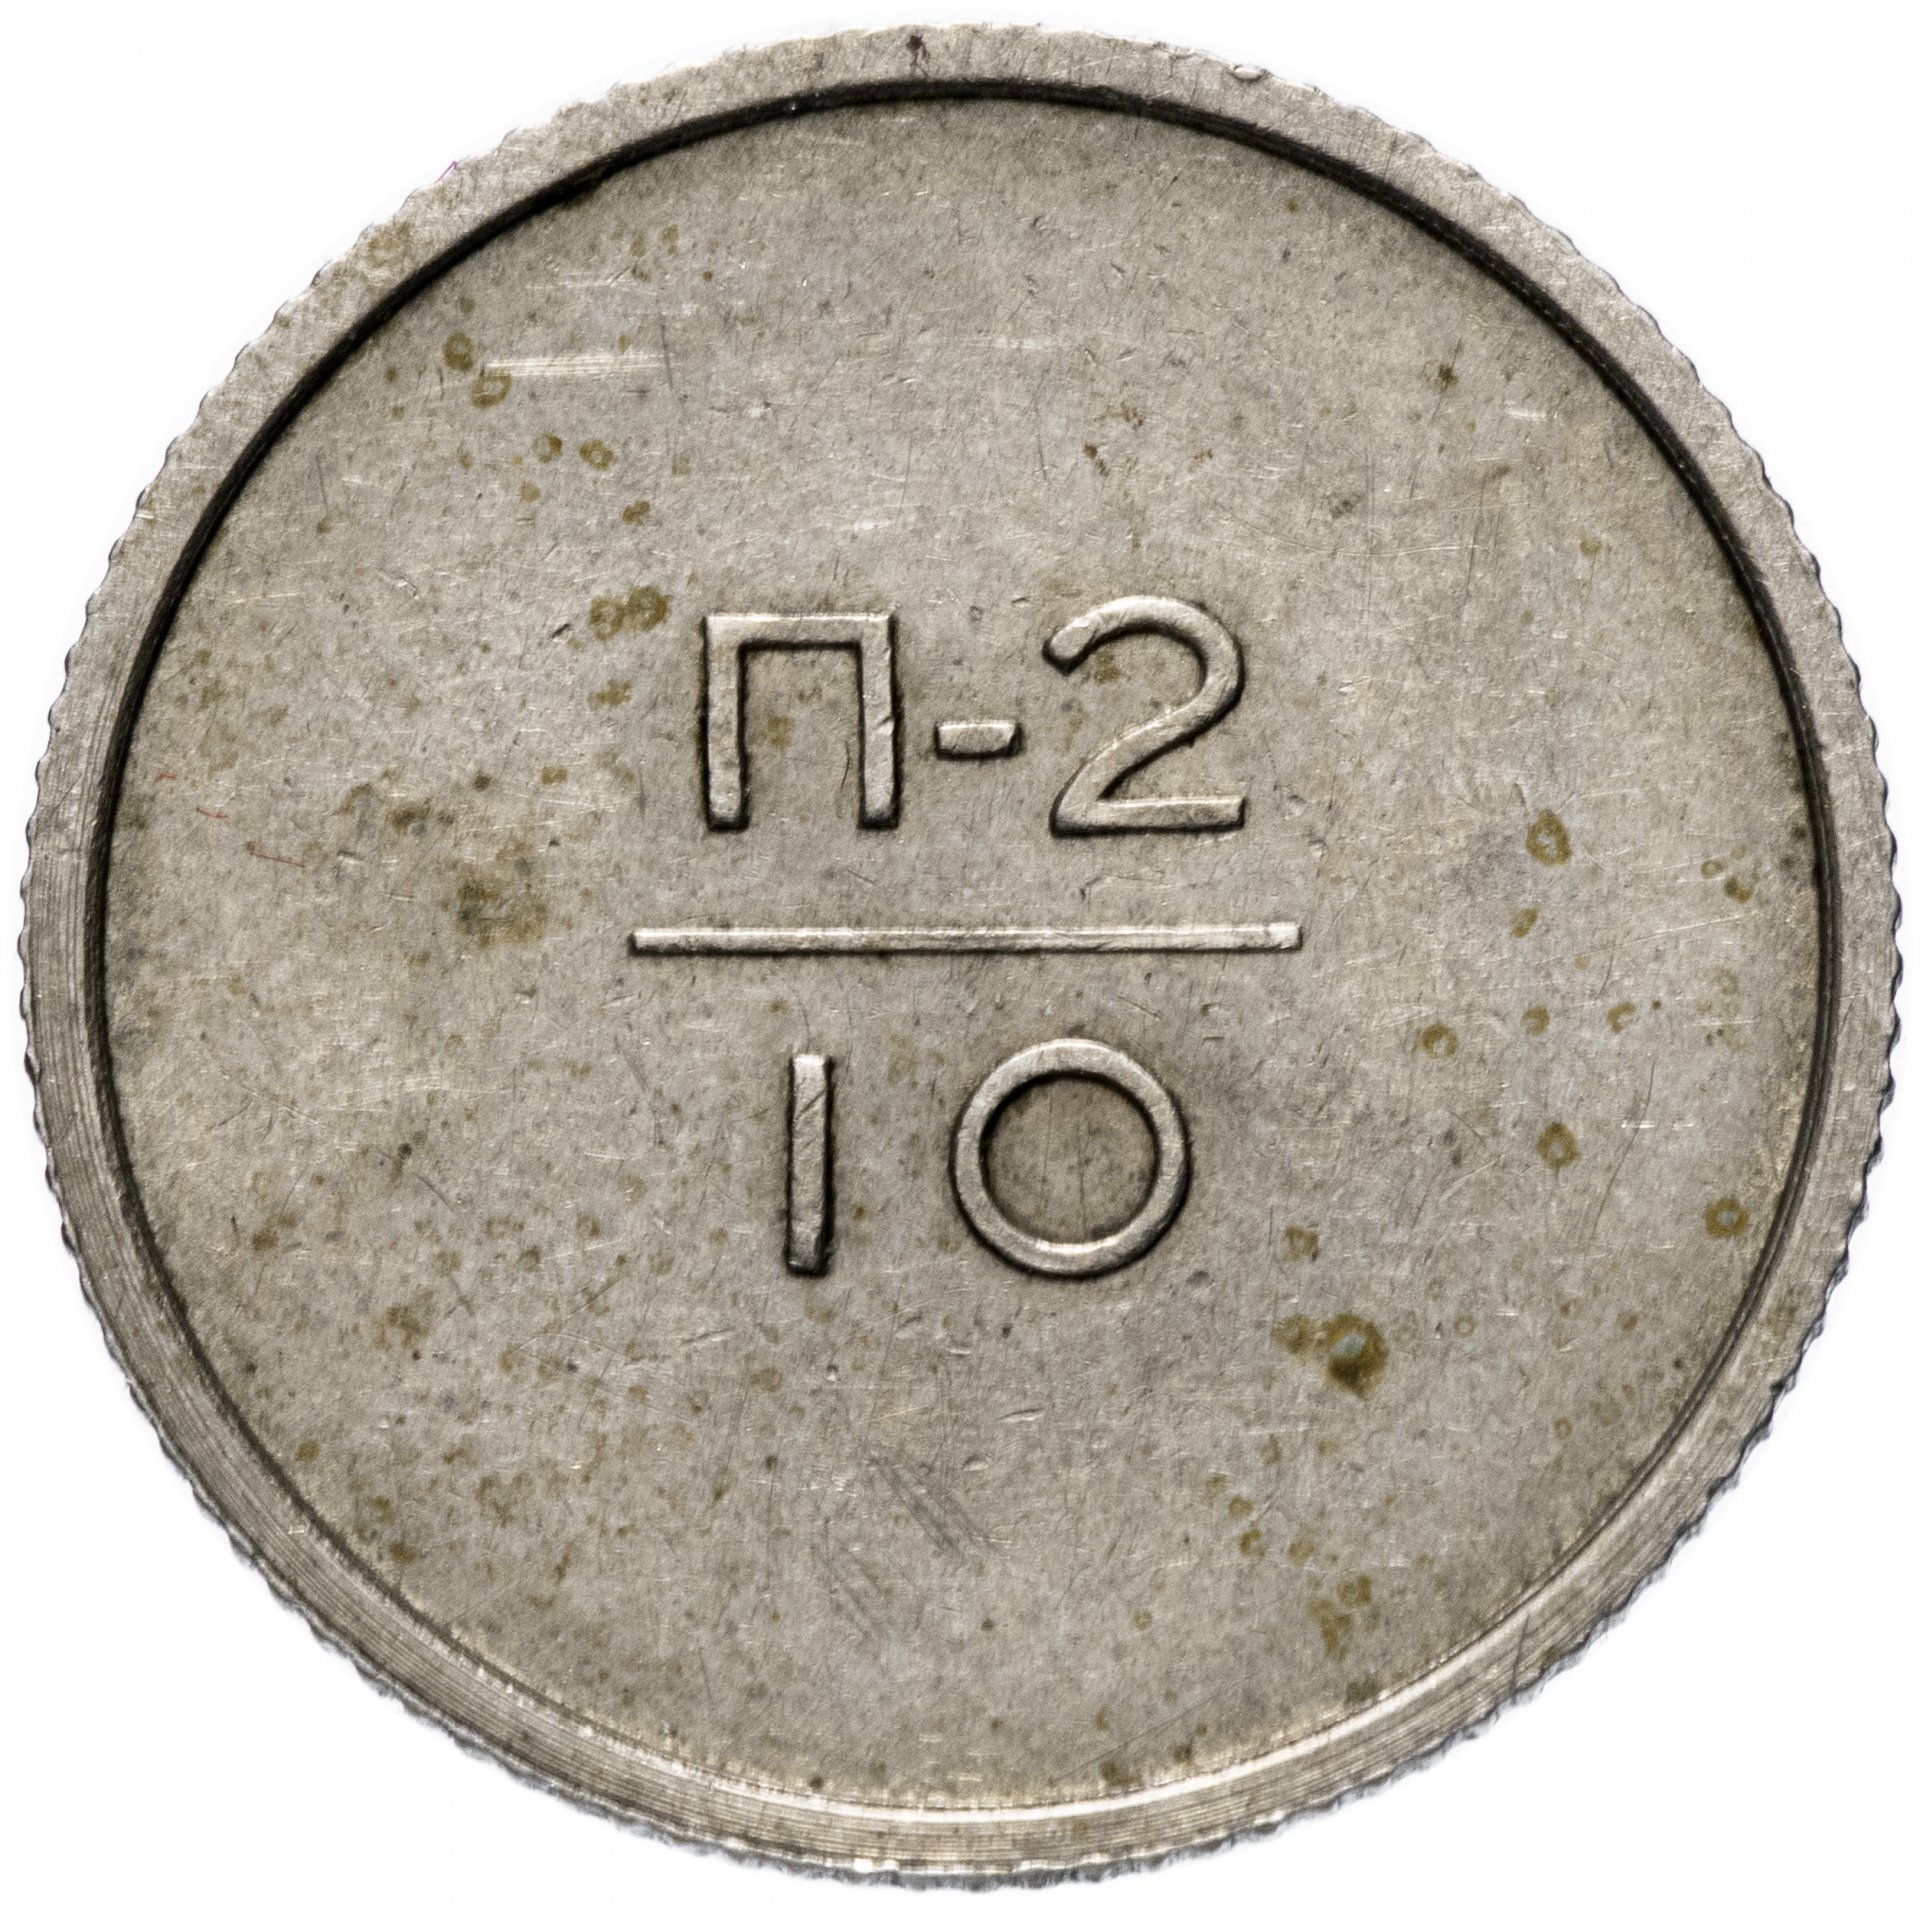 Без даты тест. Монета п2. Эталон монет. Эталон 10 копеек 1966 н-1. П 2 клеймо.